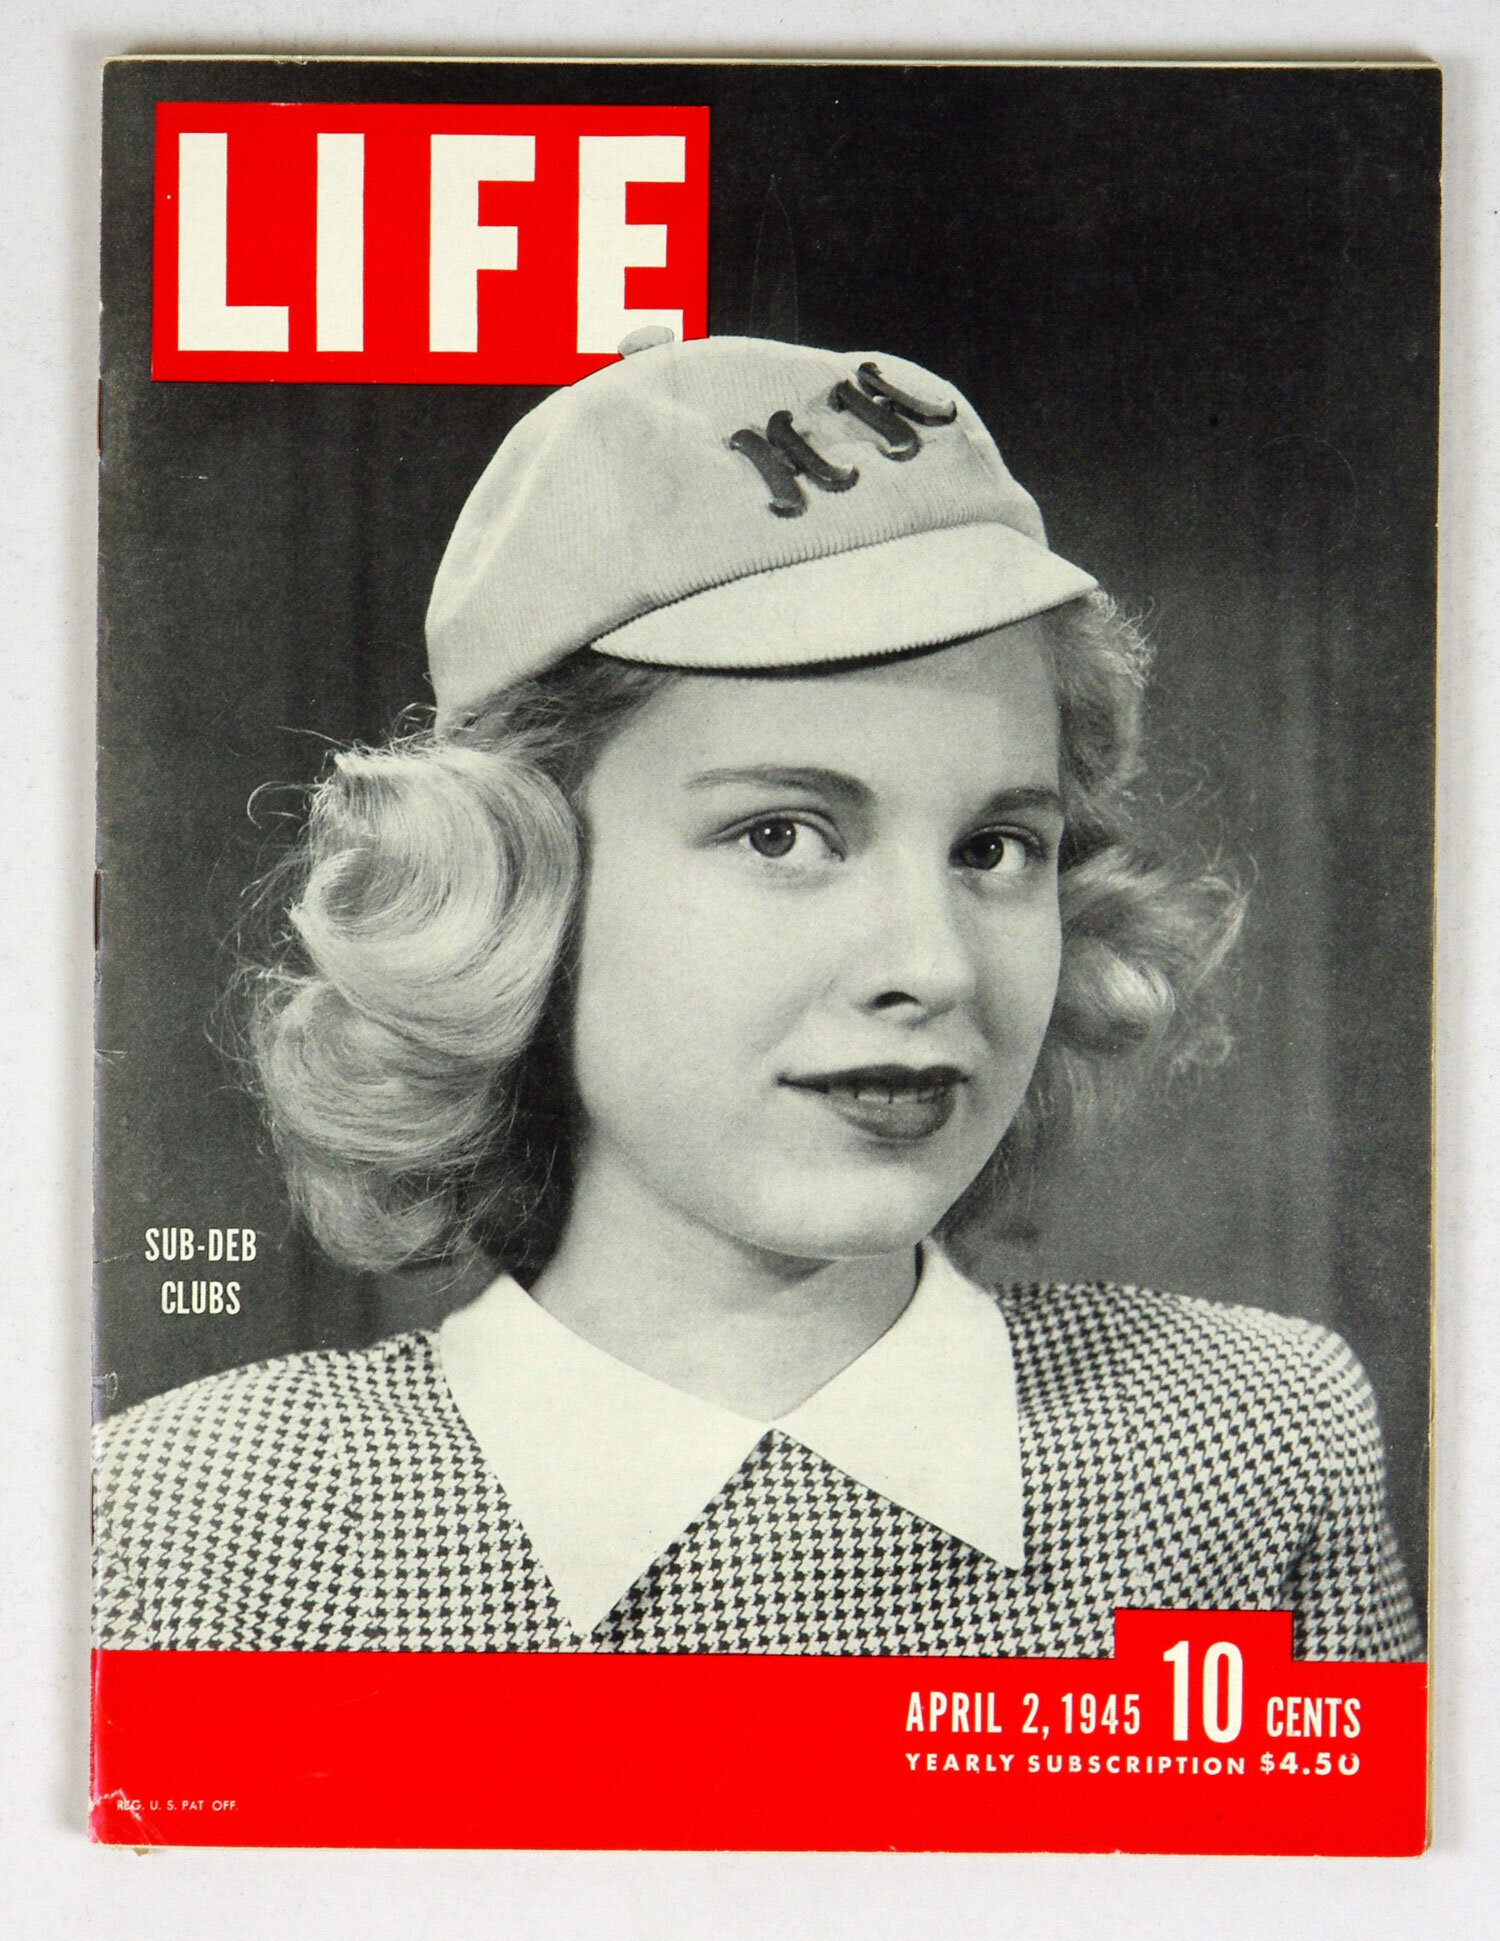 LIFE Magazine Back Issue 1945 Apr 2 Sub-Deb Clubs